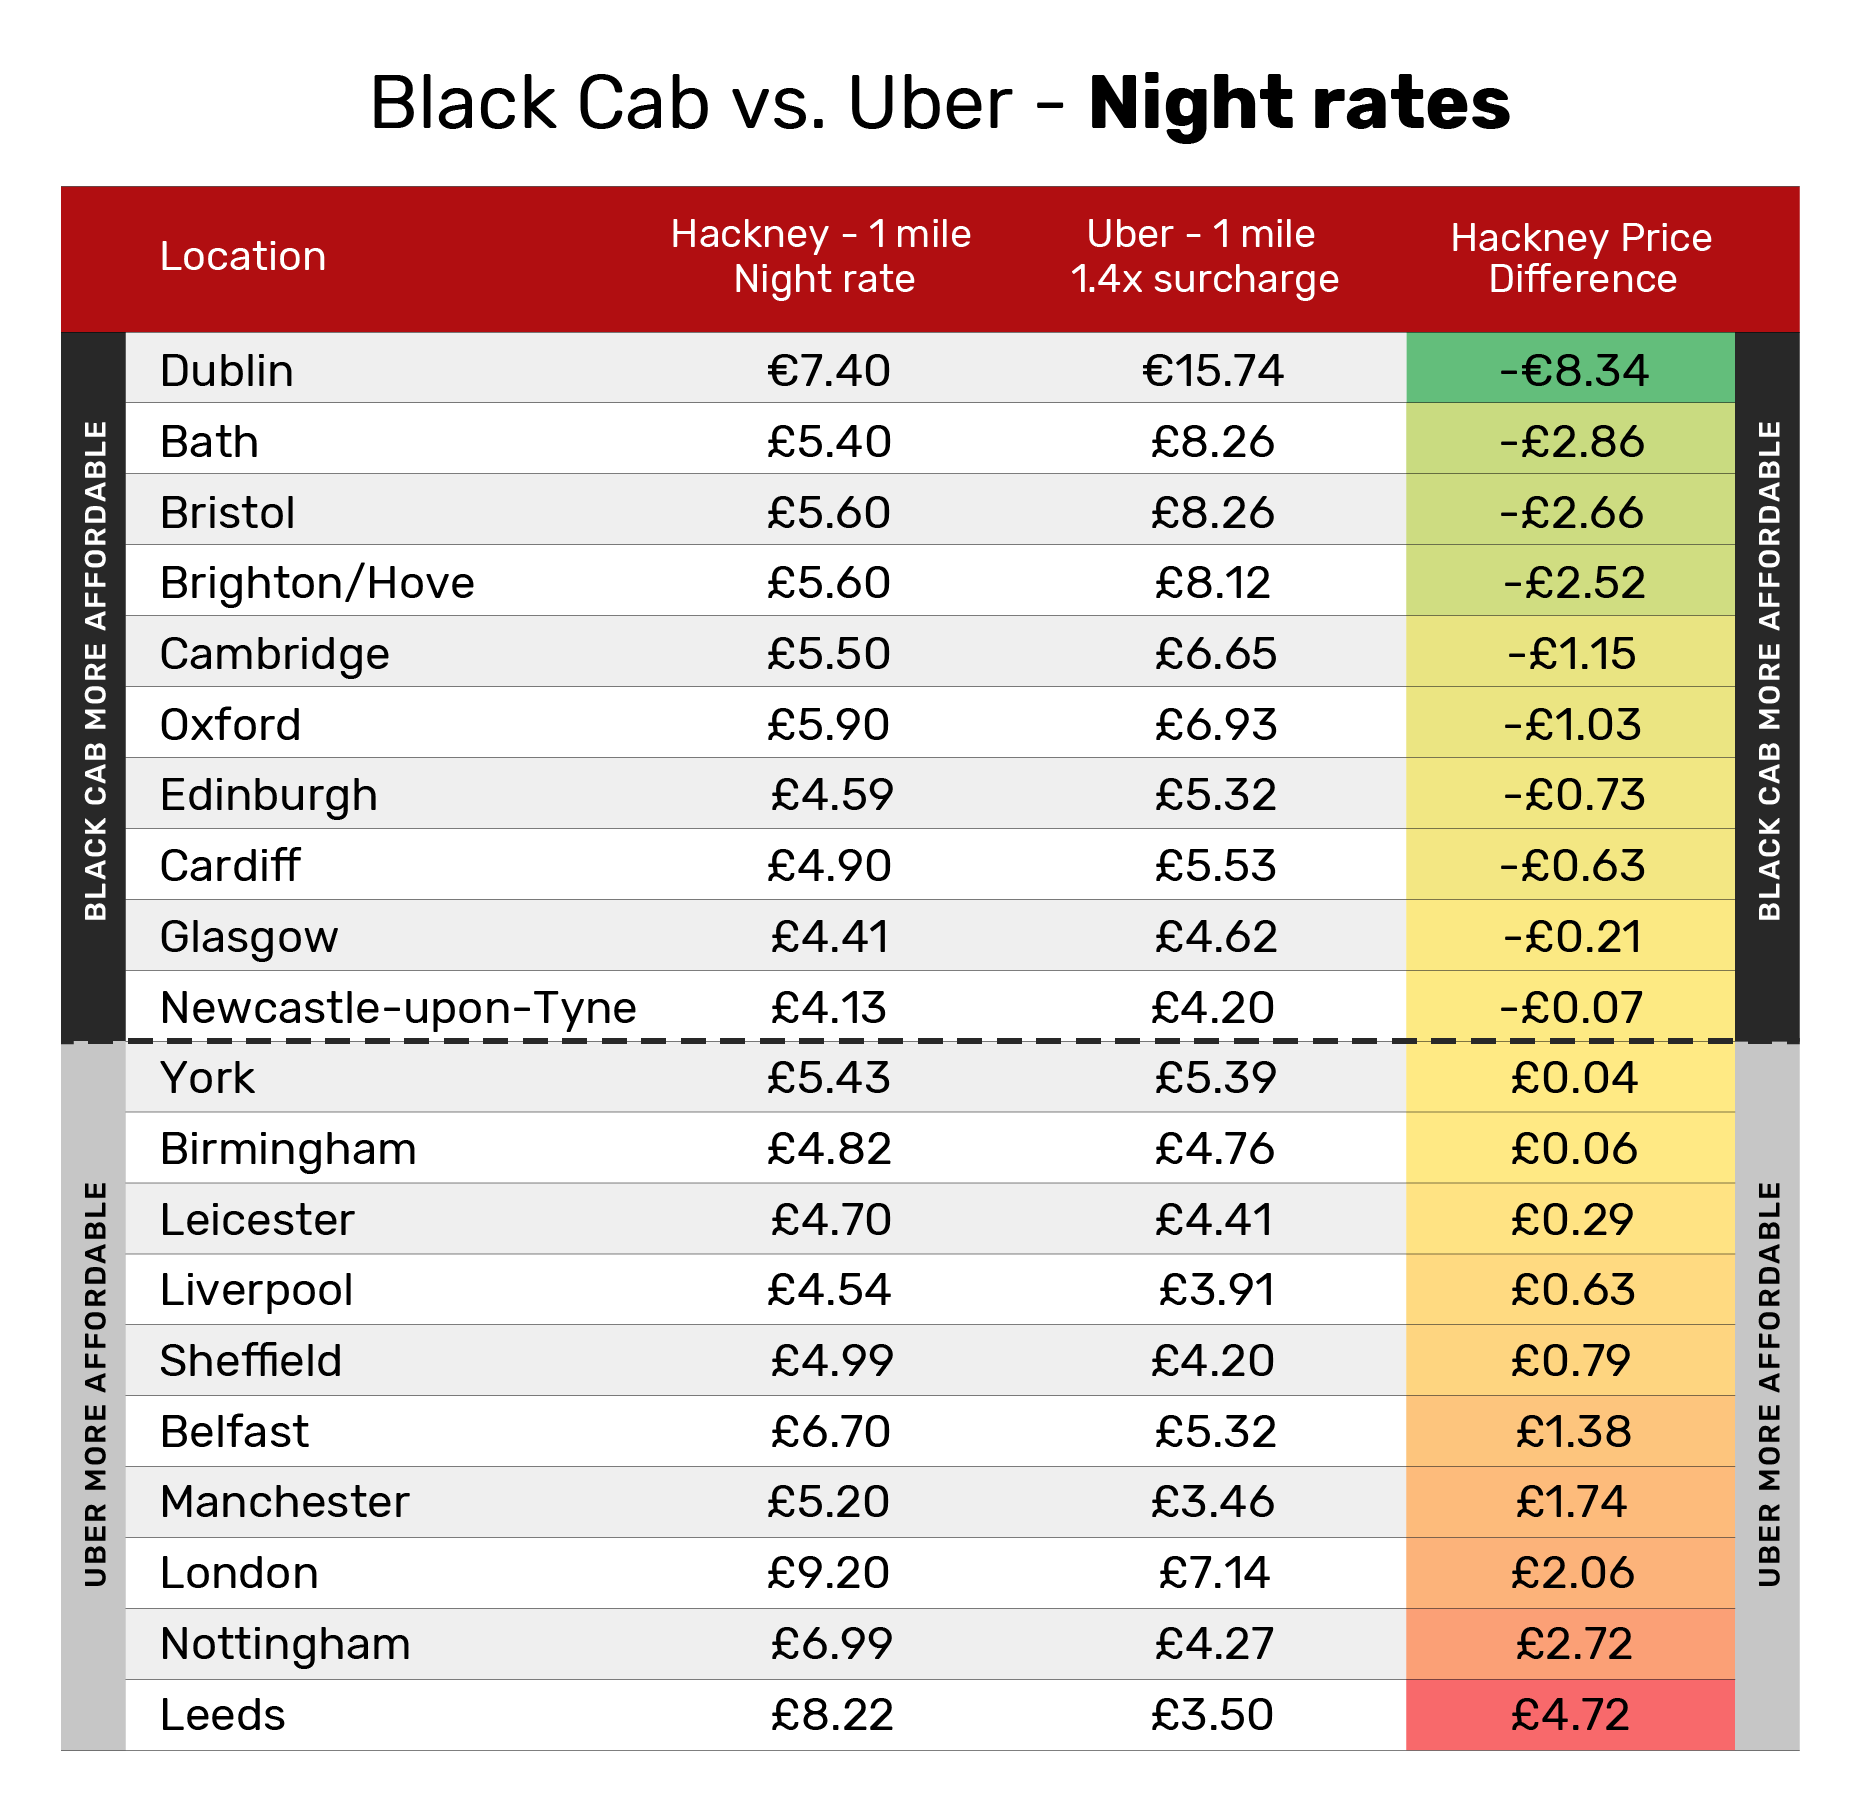 Black Cab Vs Uber Taxi Fares - Night Rates